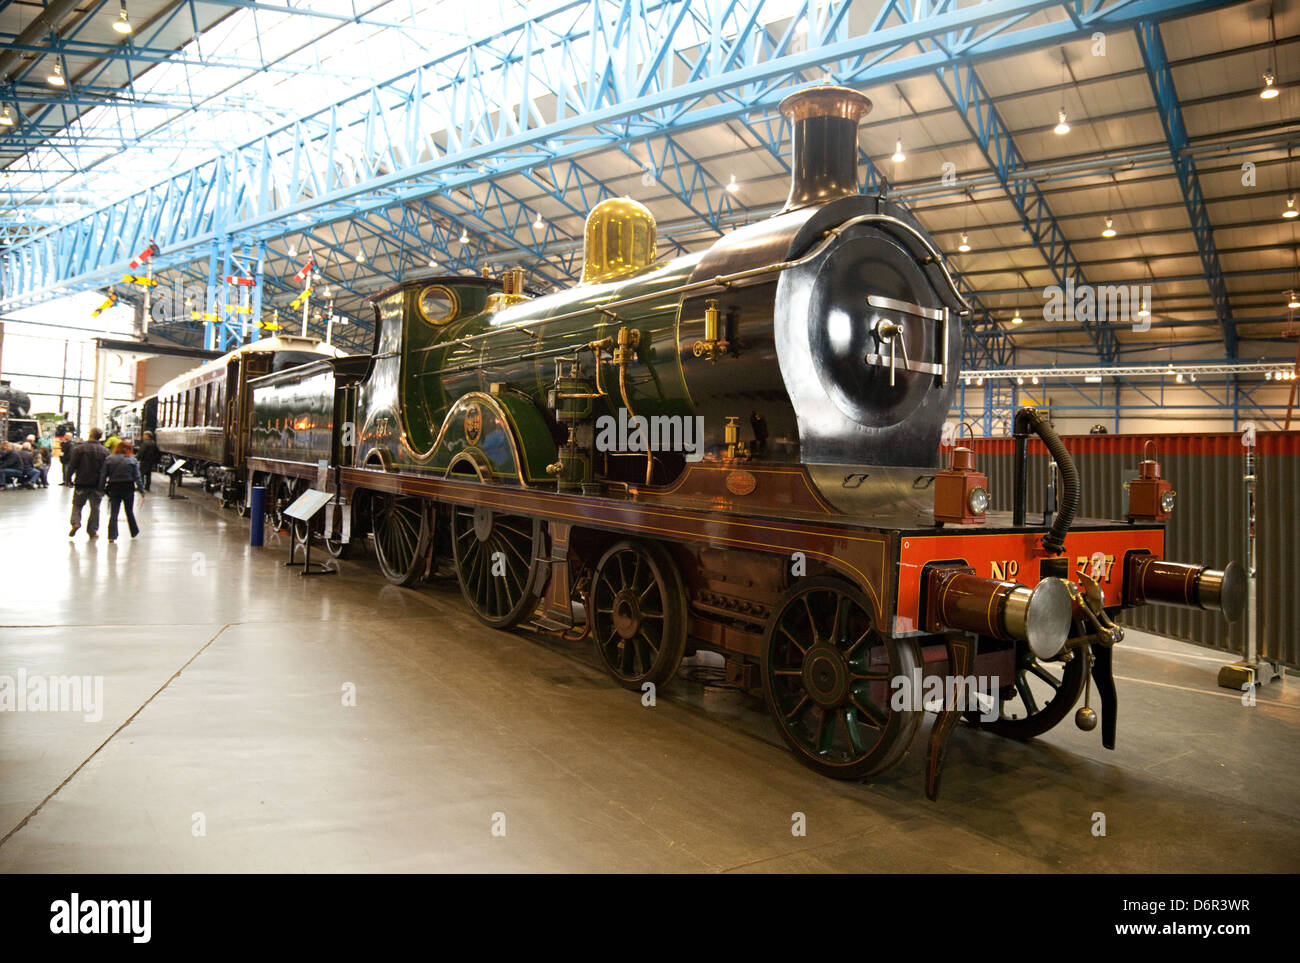 Locomotora de vapor 737 motor arrancó el barco tren express; National Railway Museum, York, REINO UNIDO Foto de stock